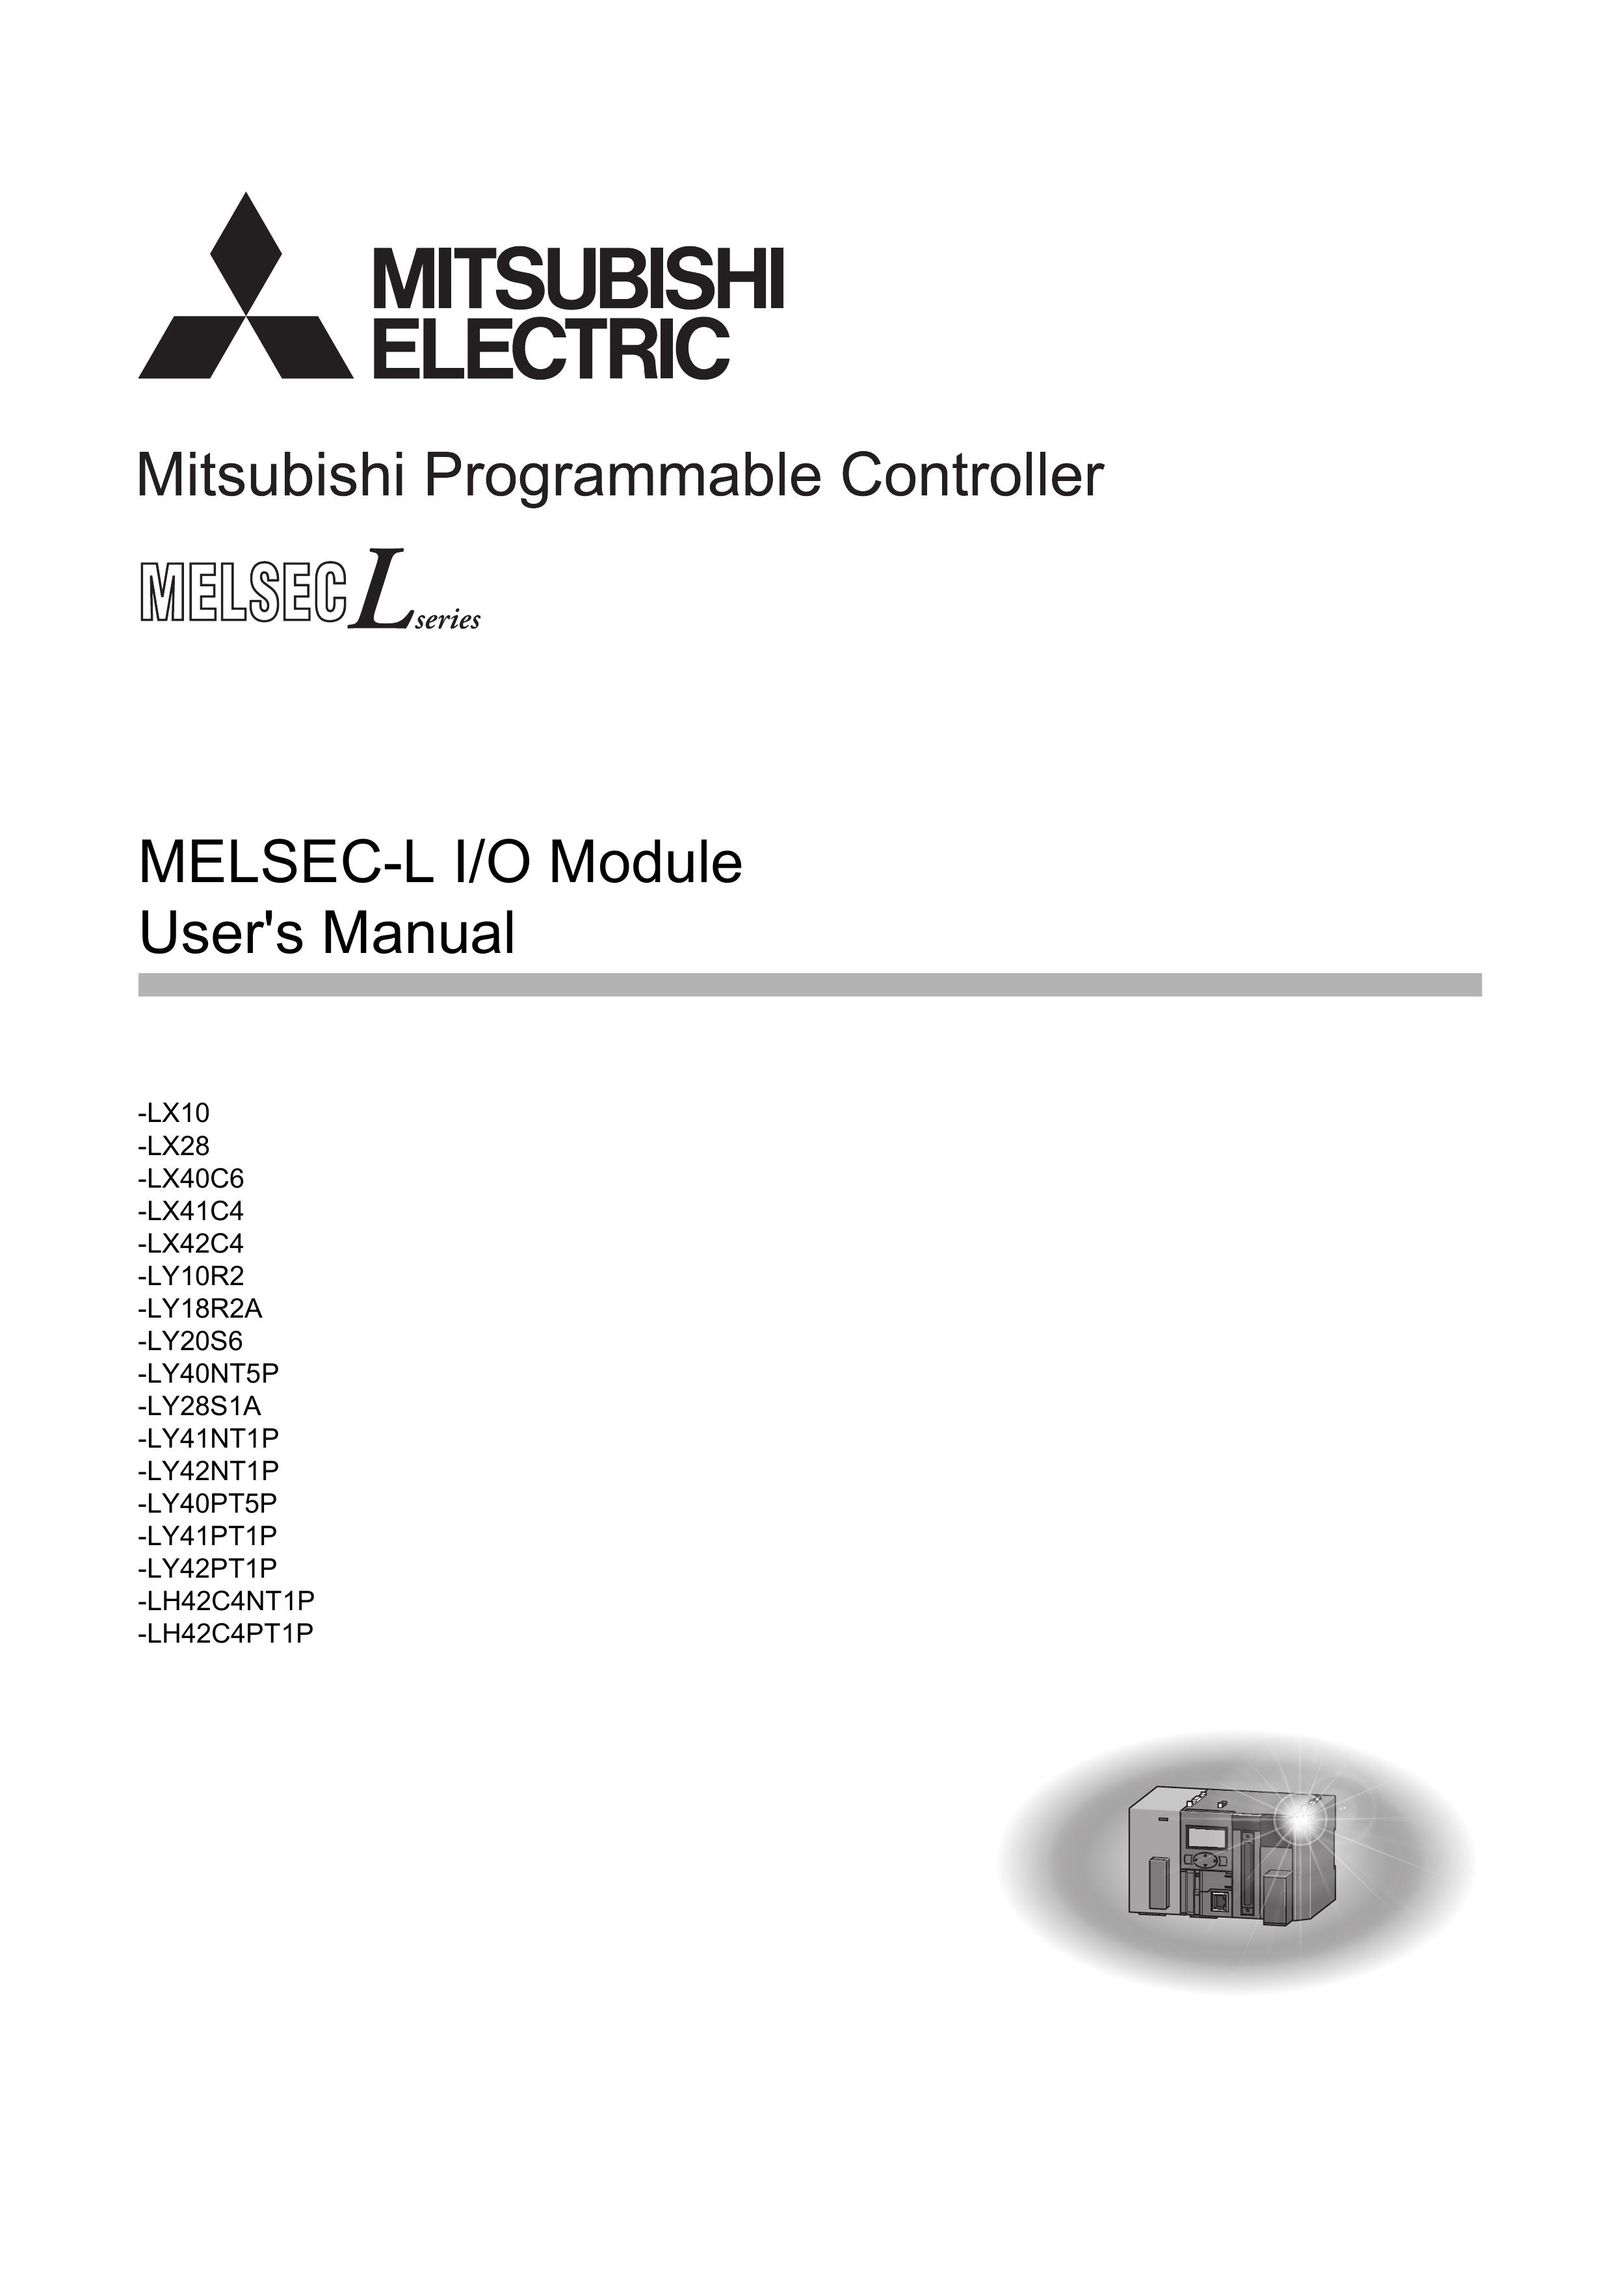 Mitsubishi Electronics LY10R2 Universal Remote User Manual